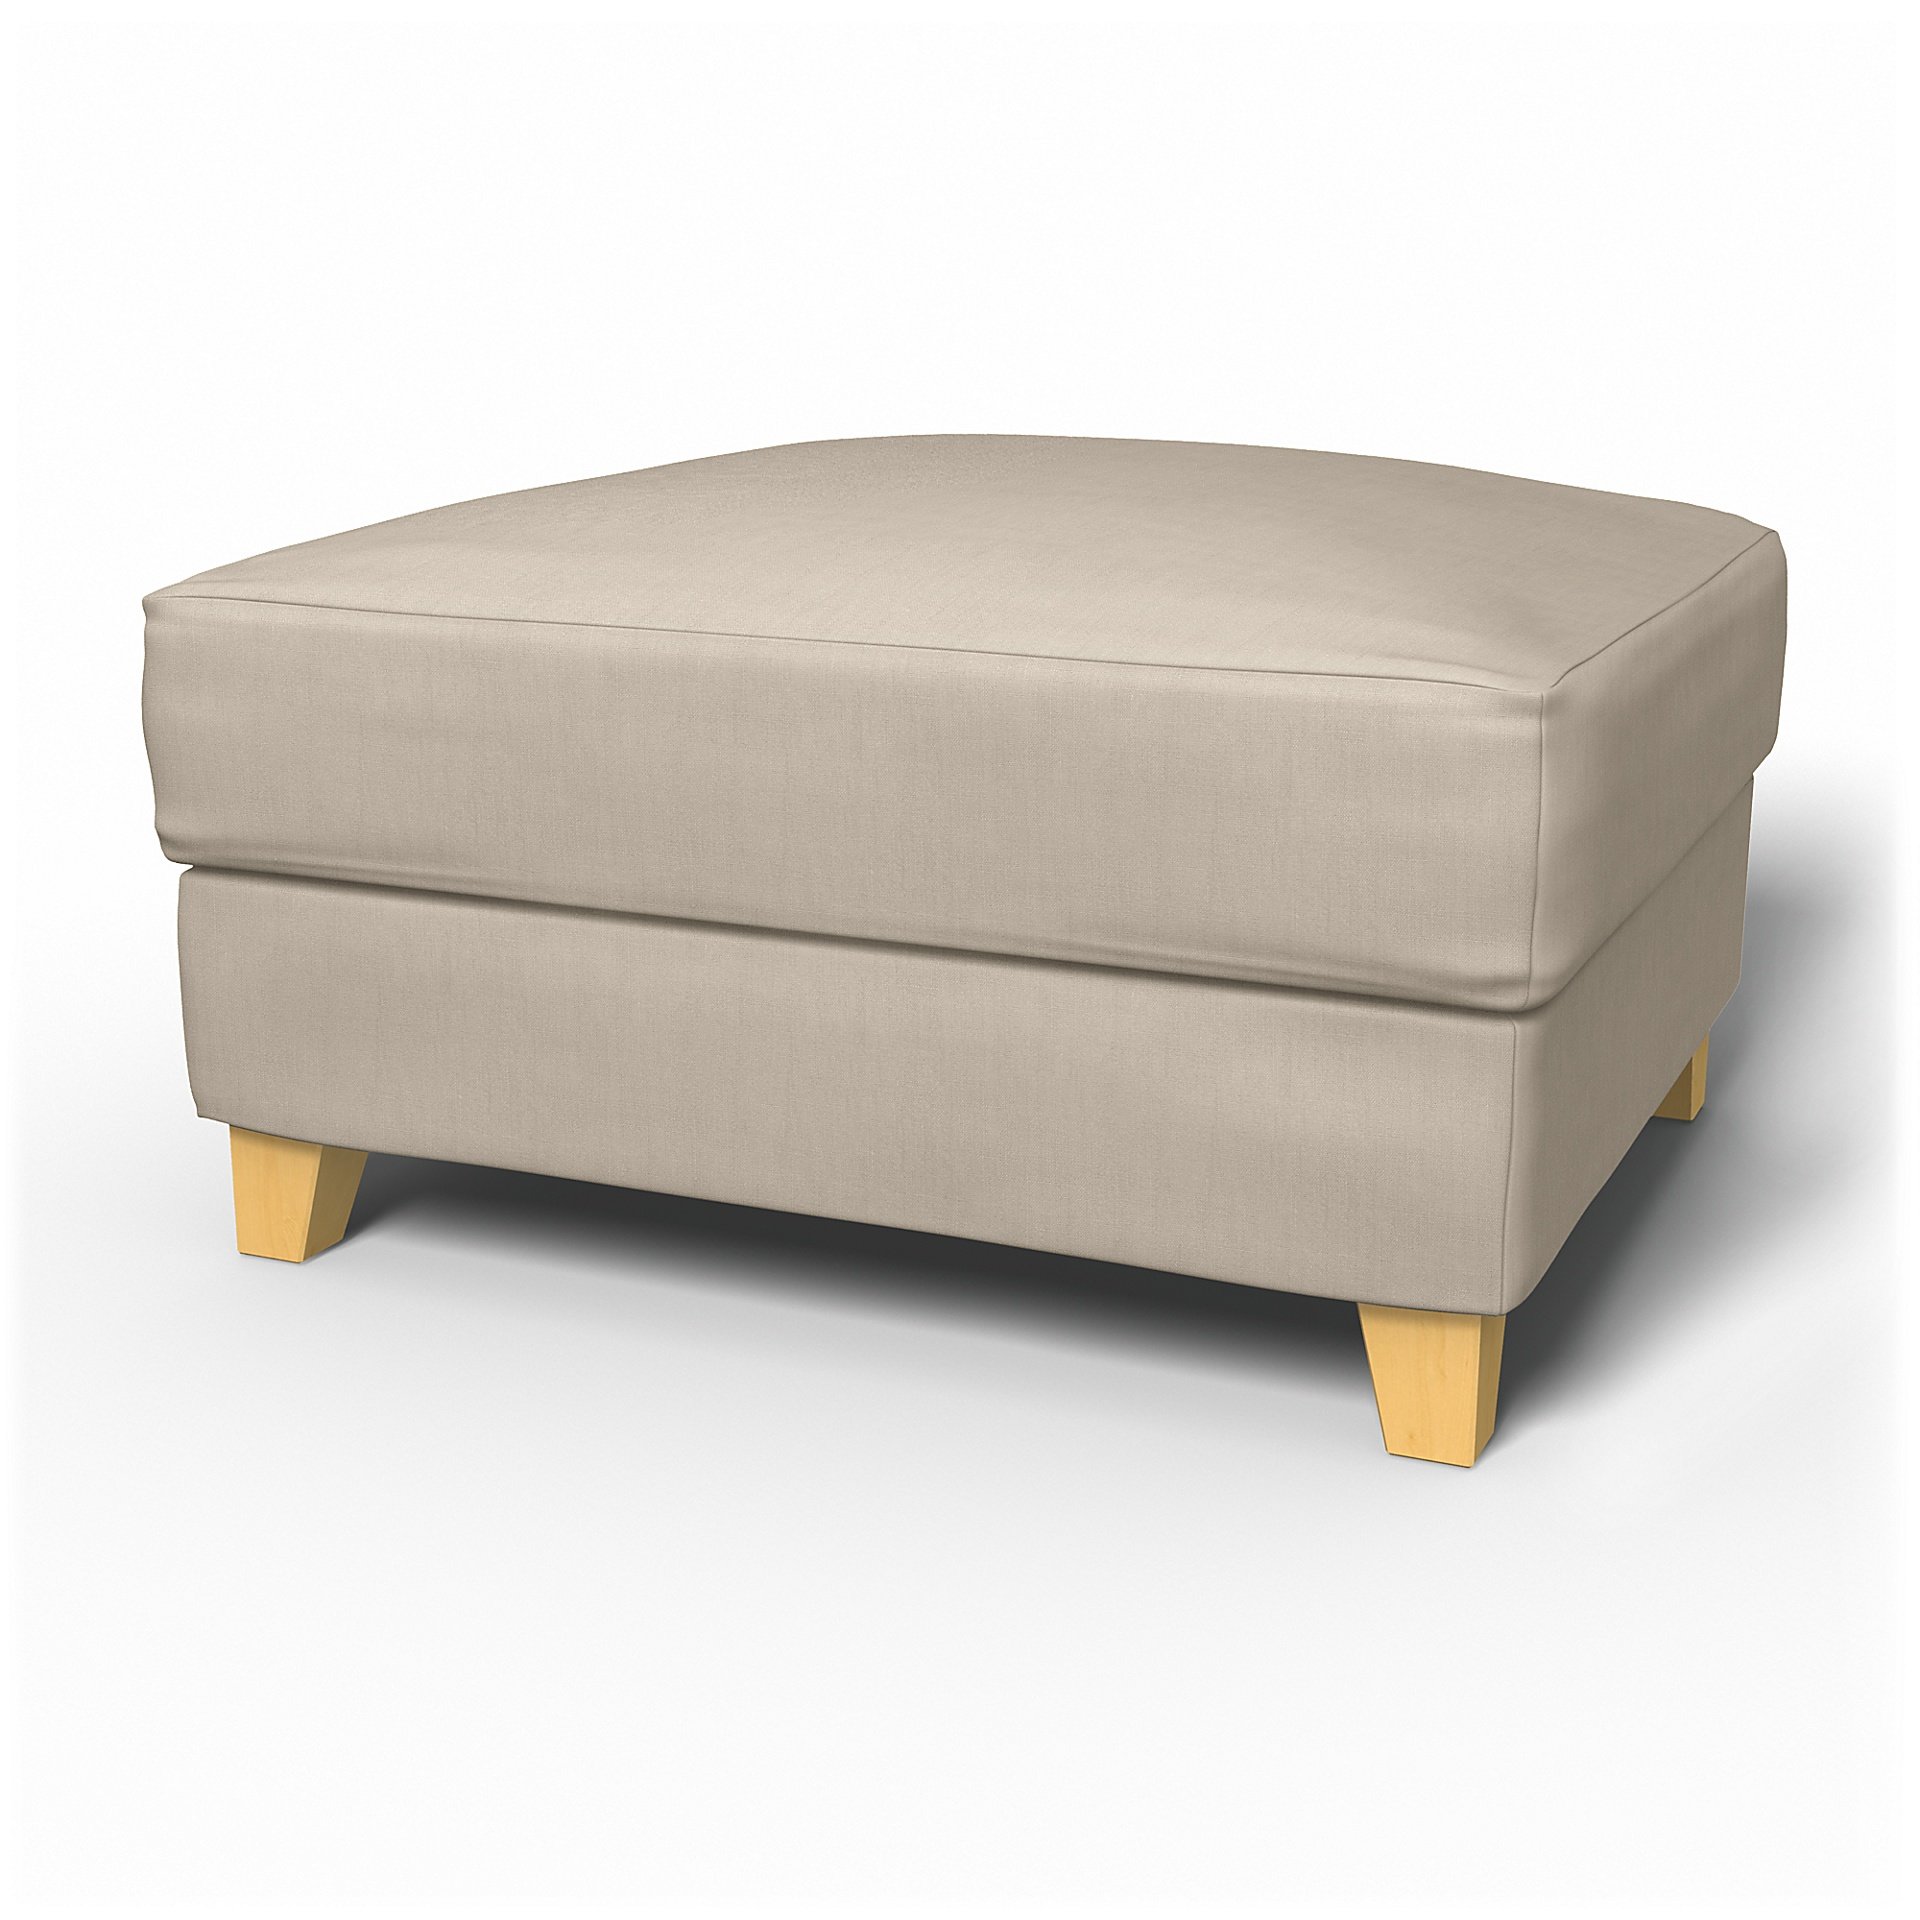 IKEA - Backa Footstool Cover, Parchment, Linen - Bemz